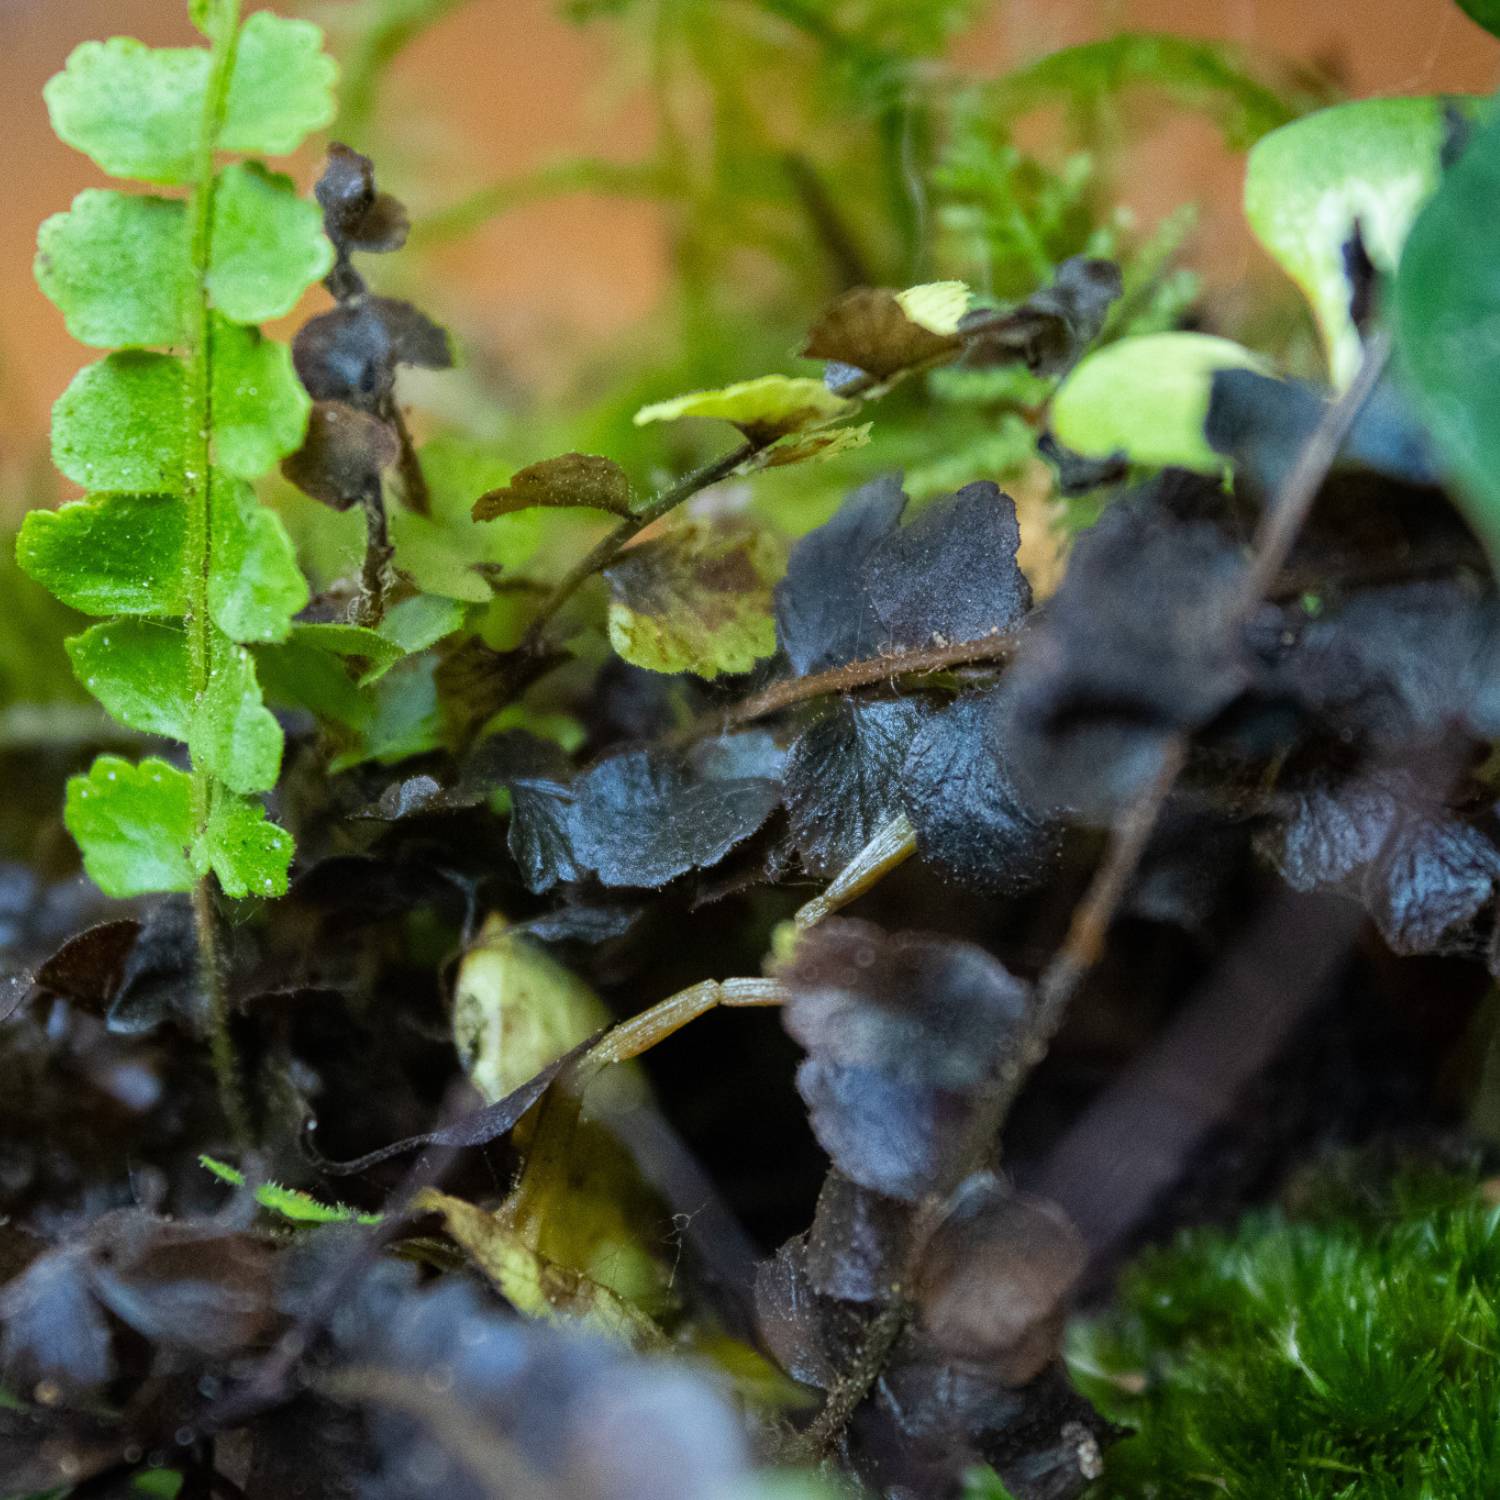 Blackened leaves terrarium